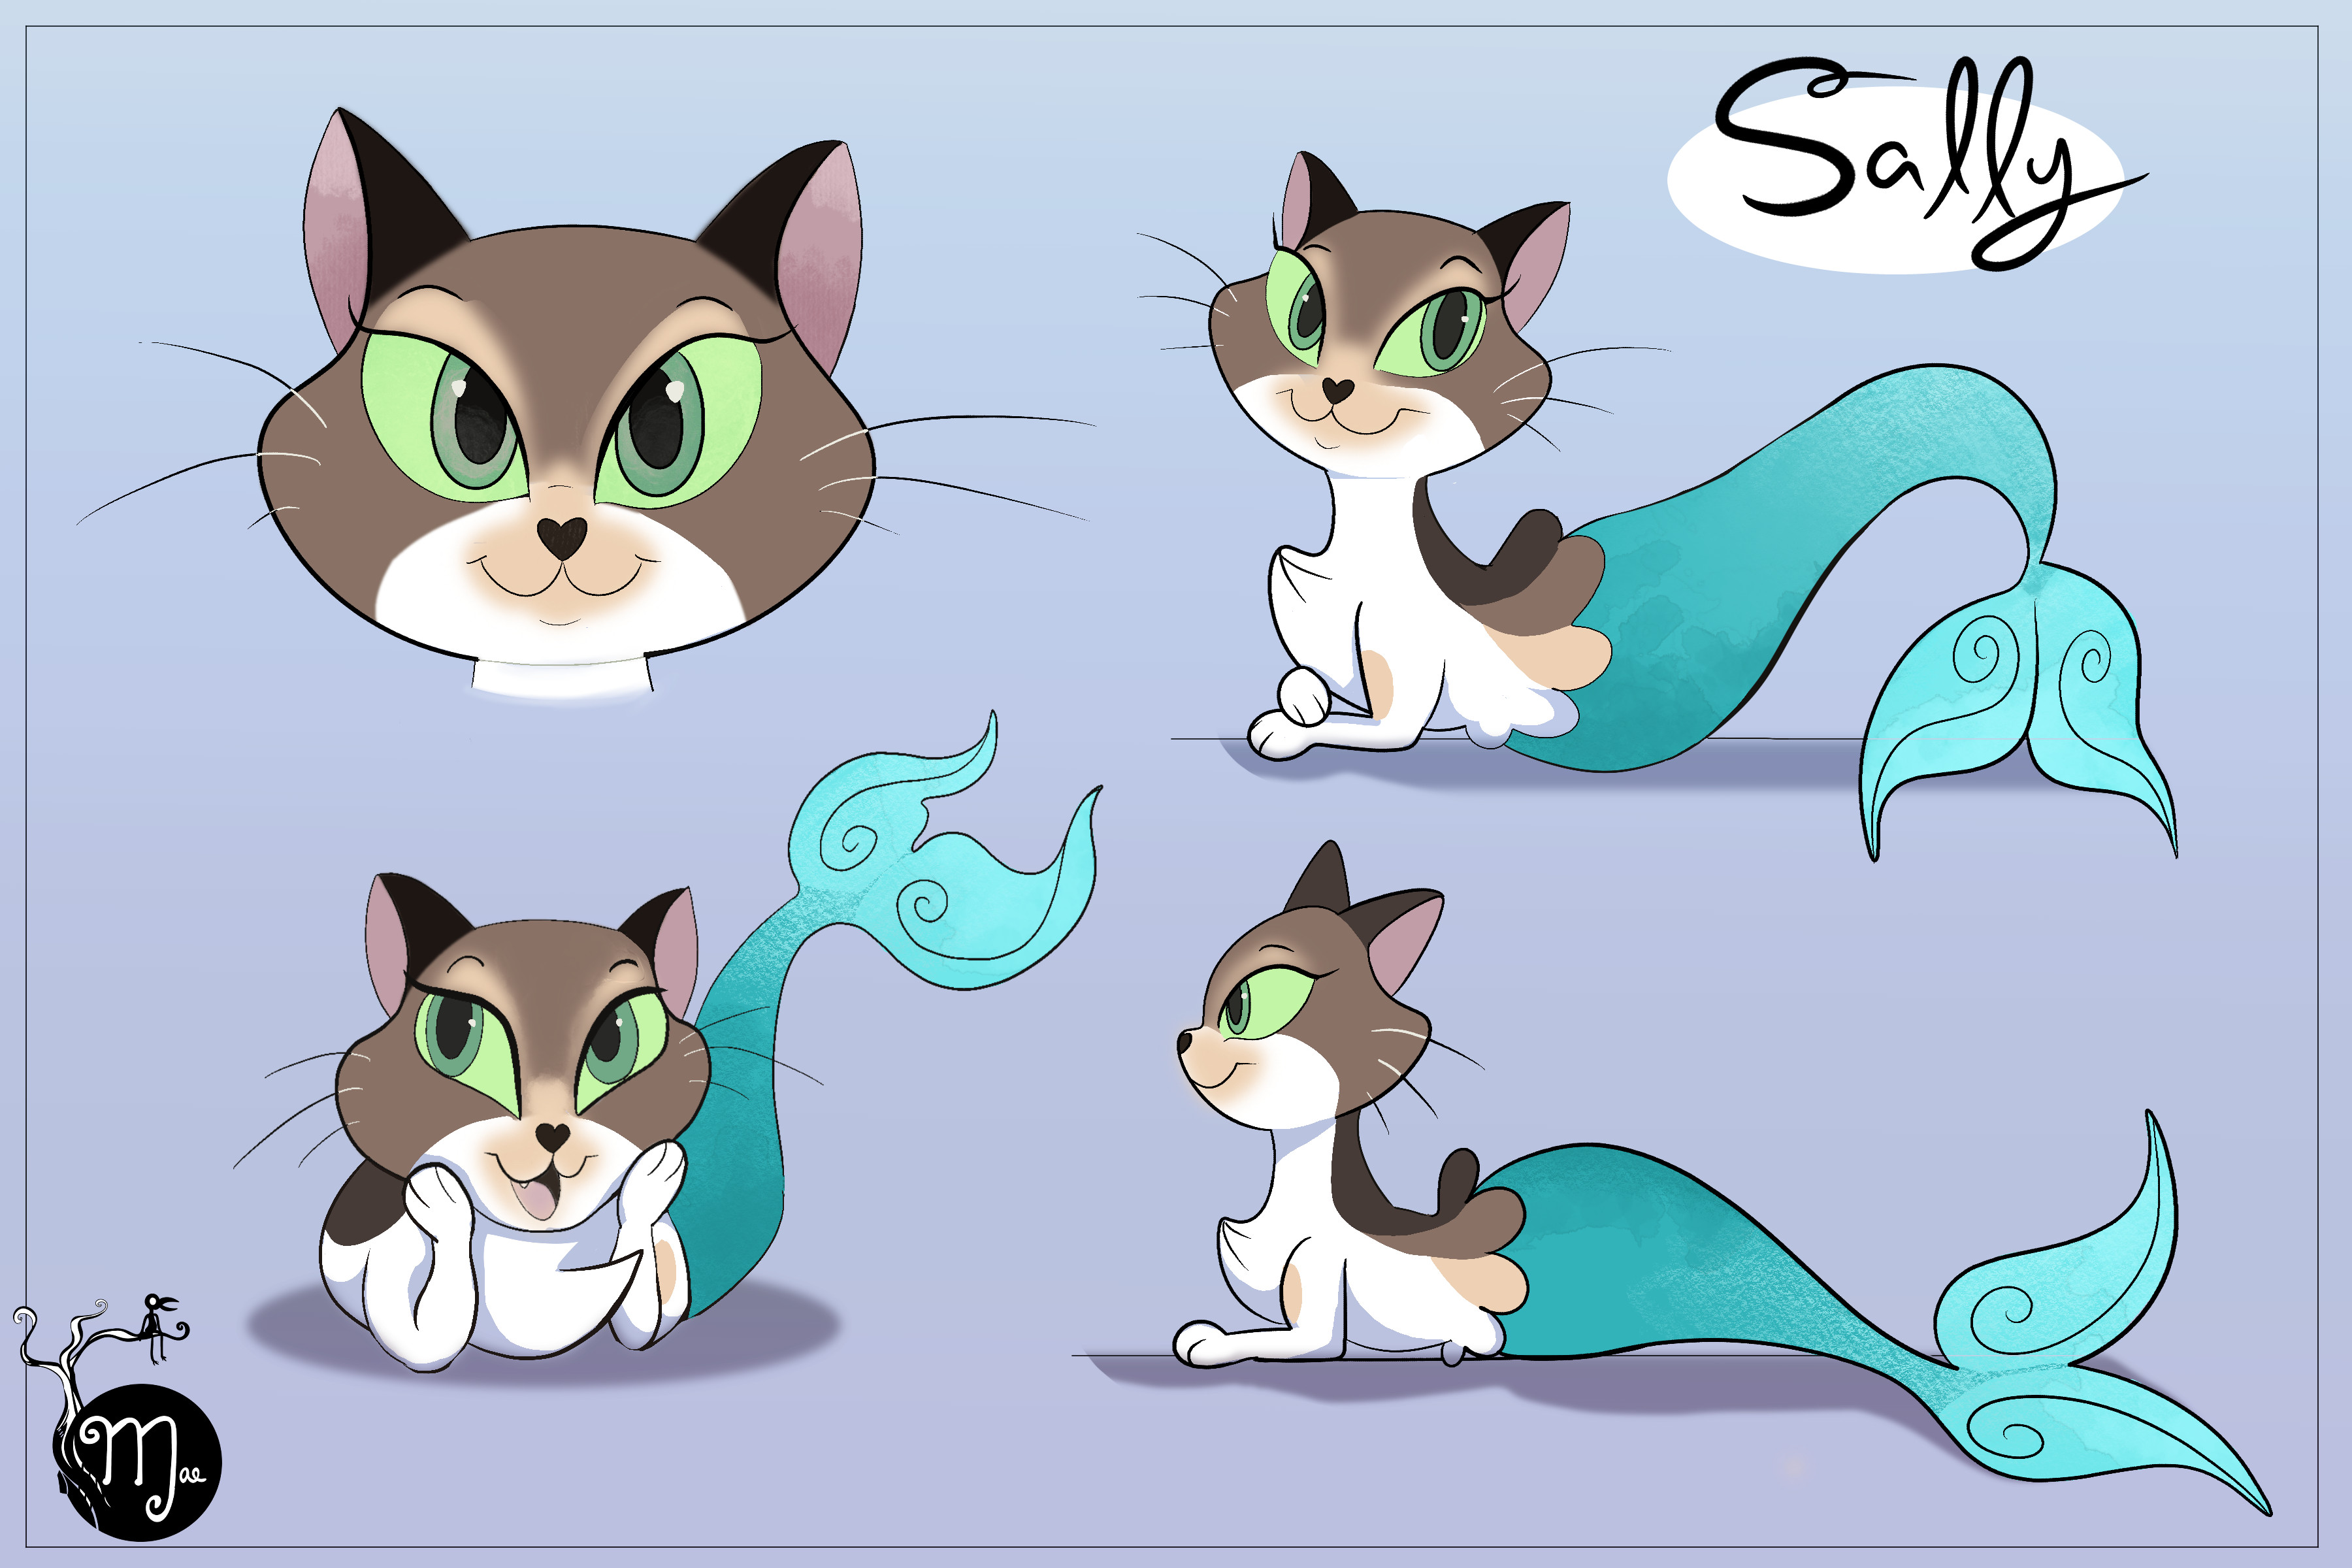 'Sally The Mermaid Cat' Character model